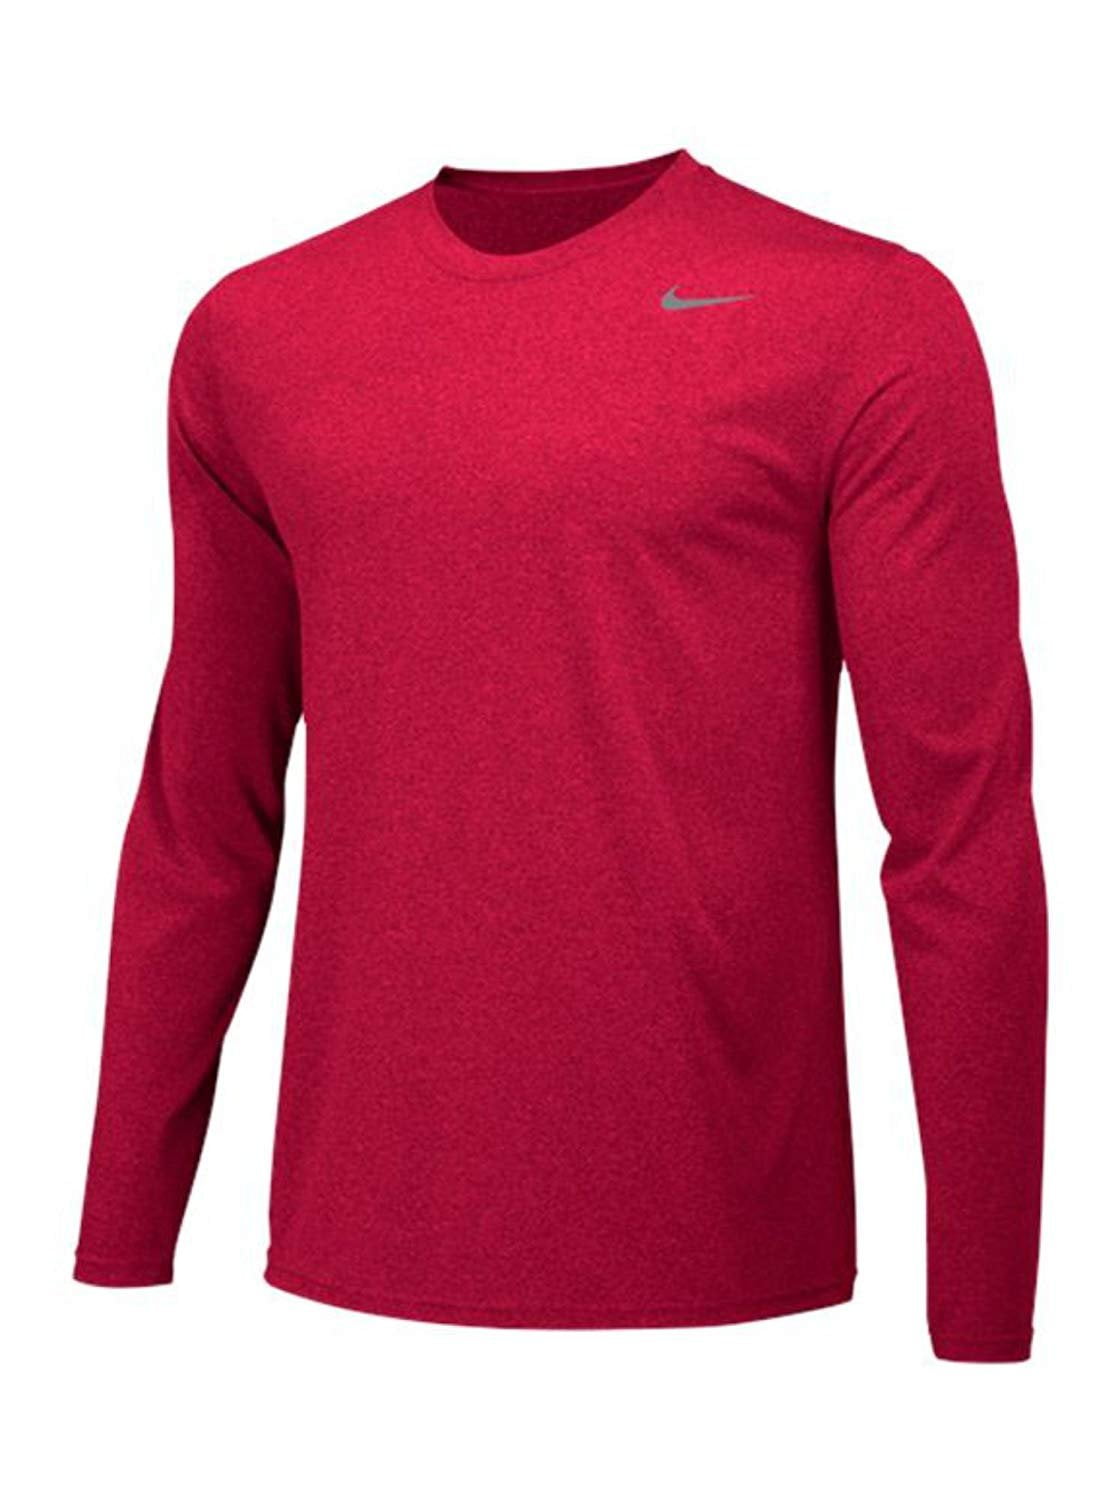 Nike Men\'s Team Legend Sleeve RED/Cool University Grey - 727980-657 X-Large - - Top SZ. Long Training